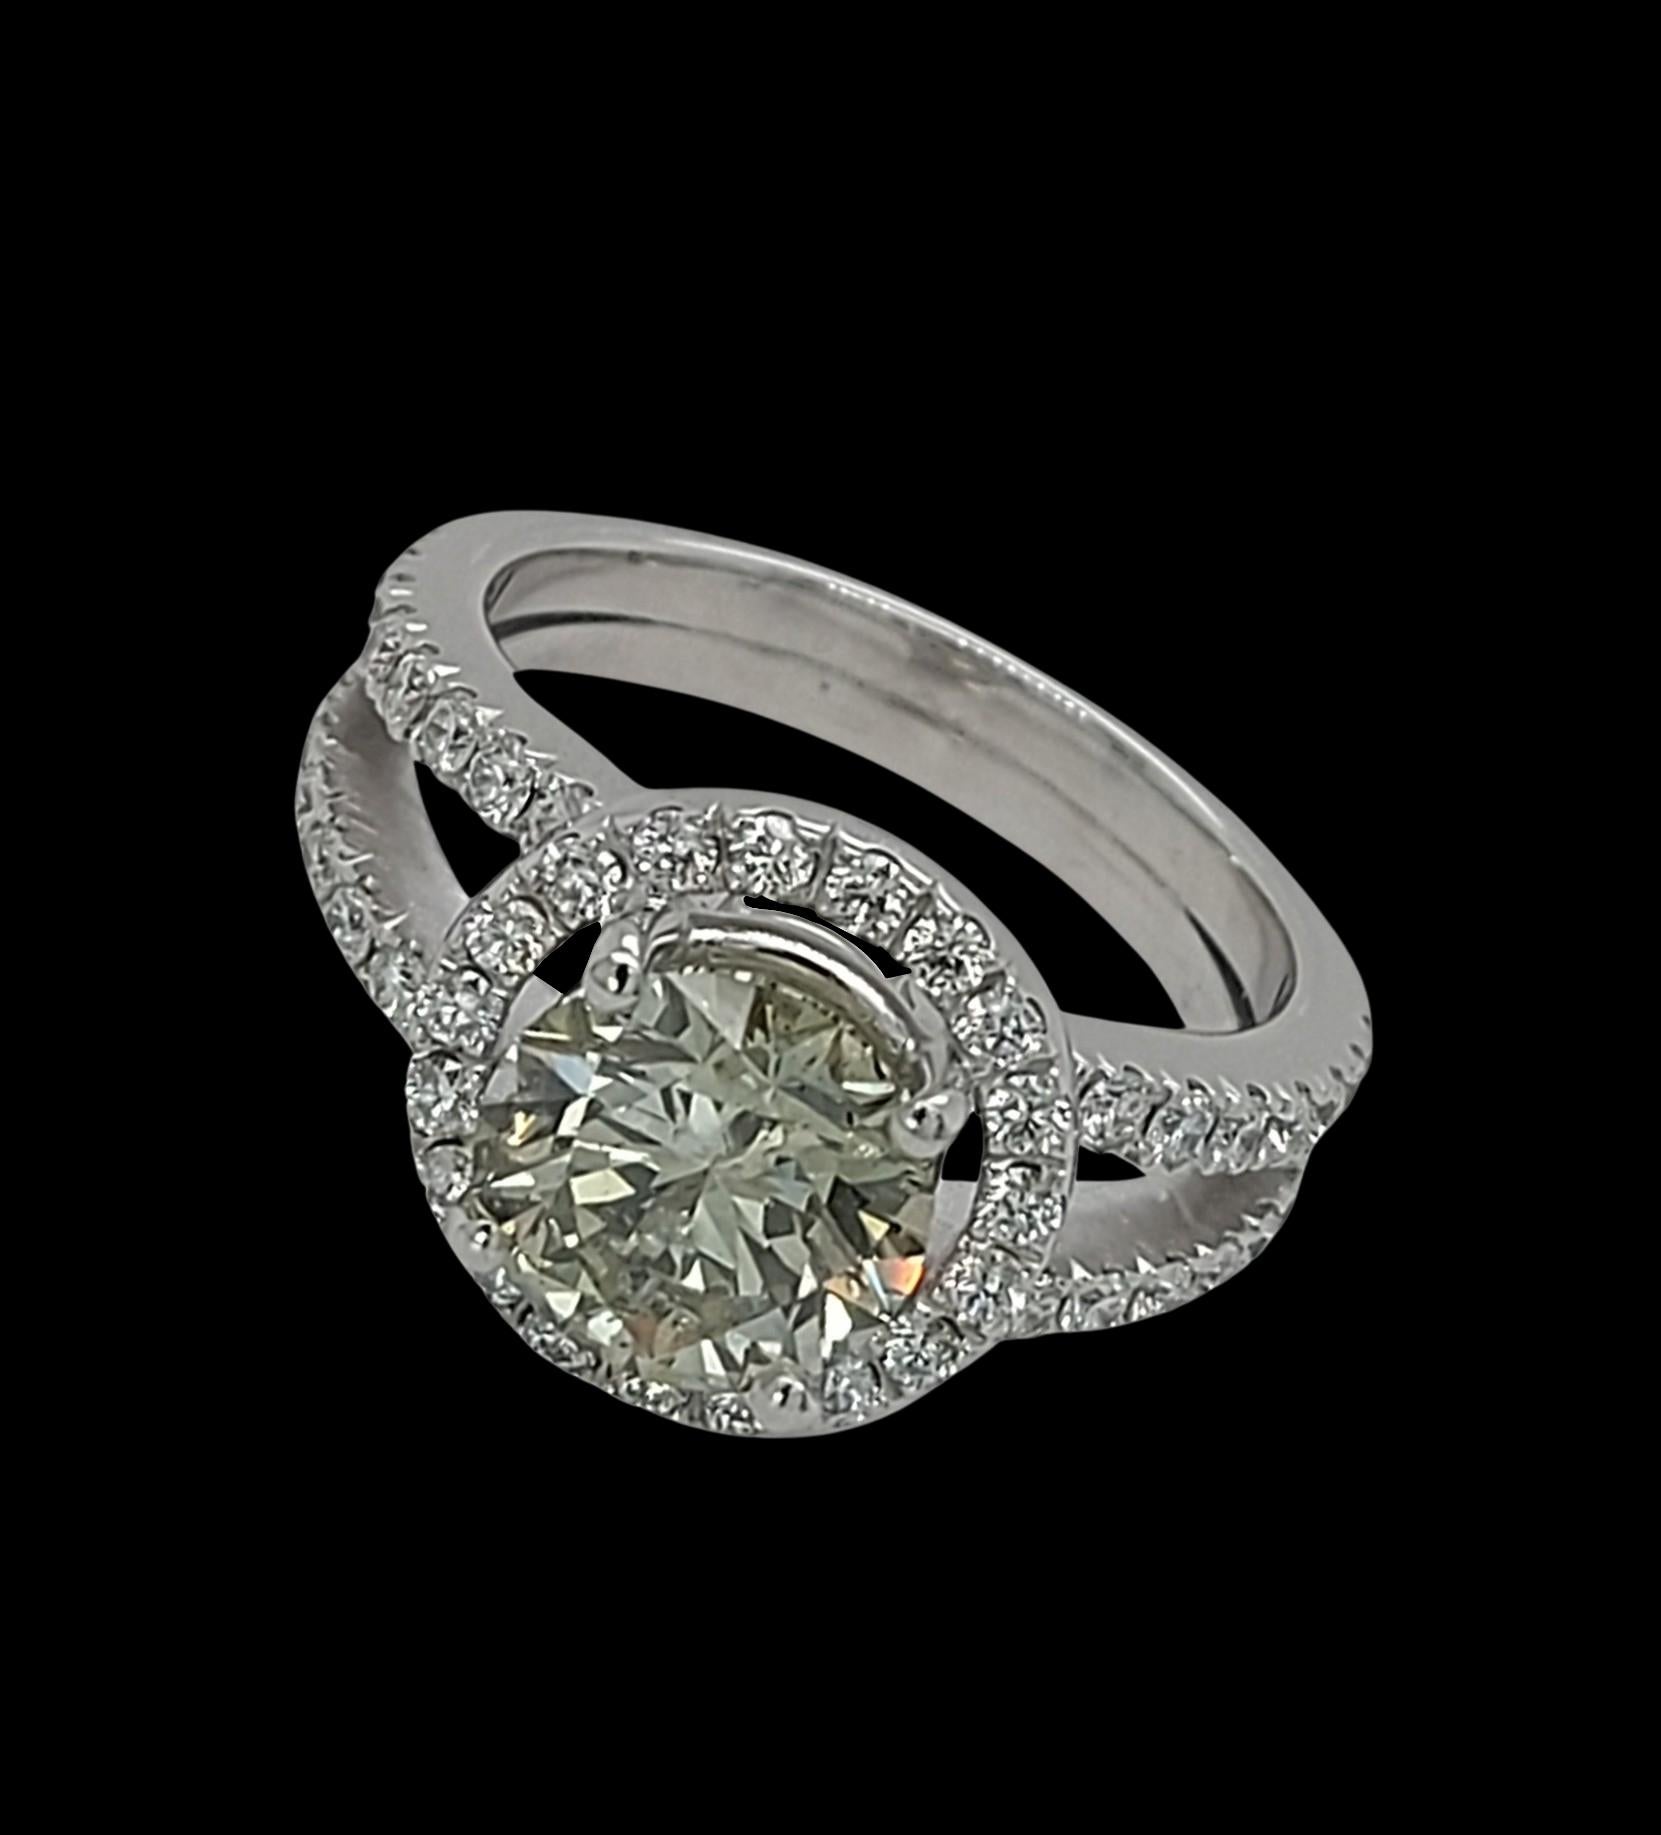 Chameleon Colour Change 2.10 Ct Diamond 18 kt Ring, GIA Certificate For Sale 2